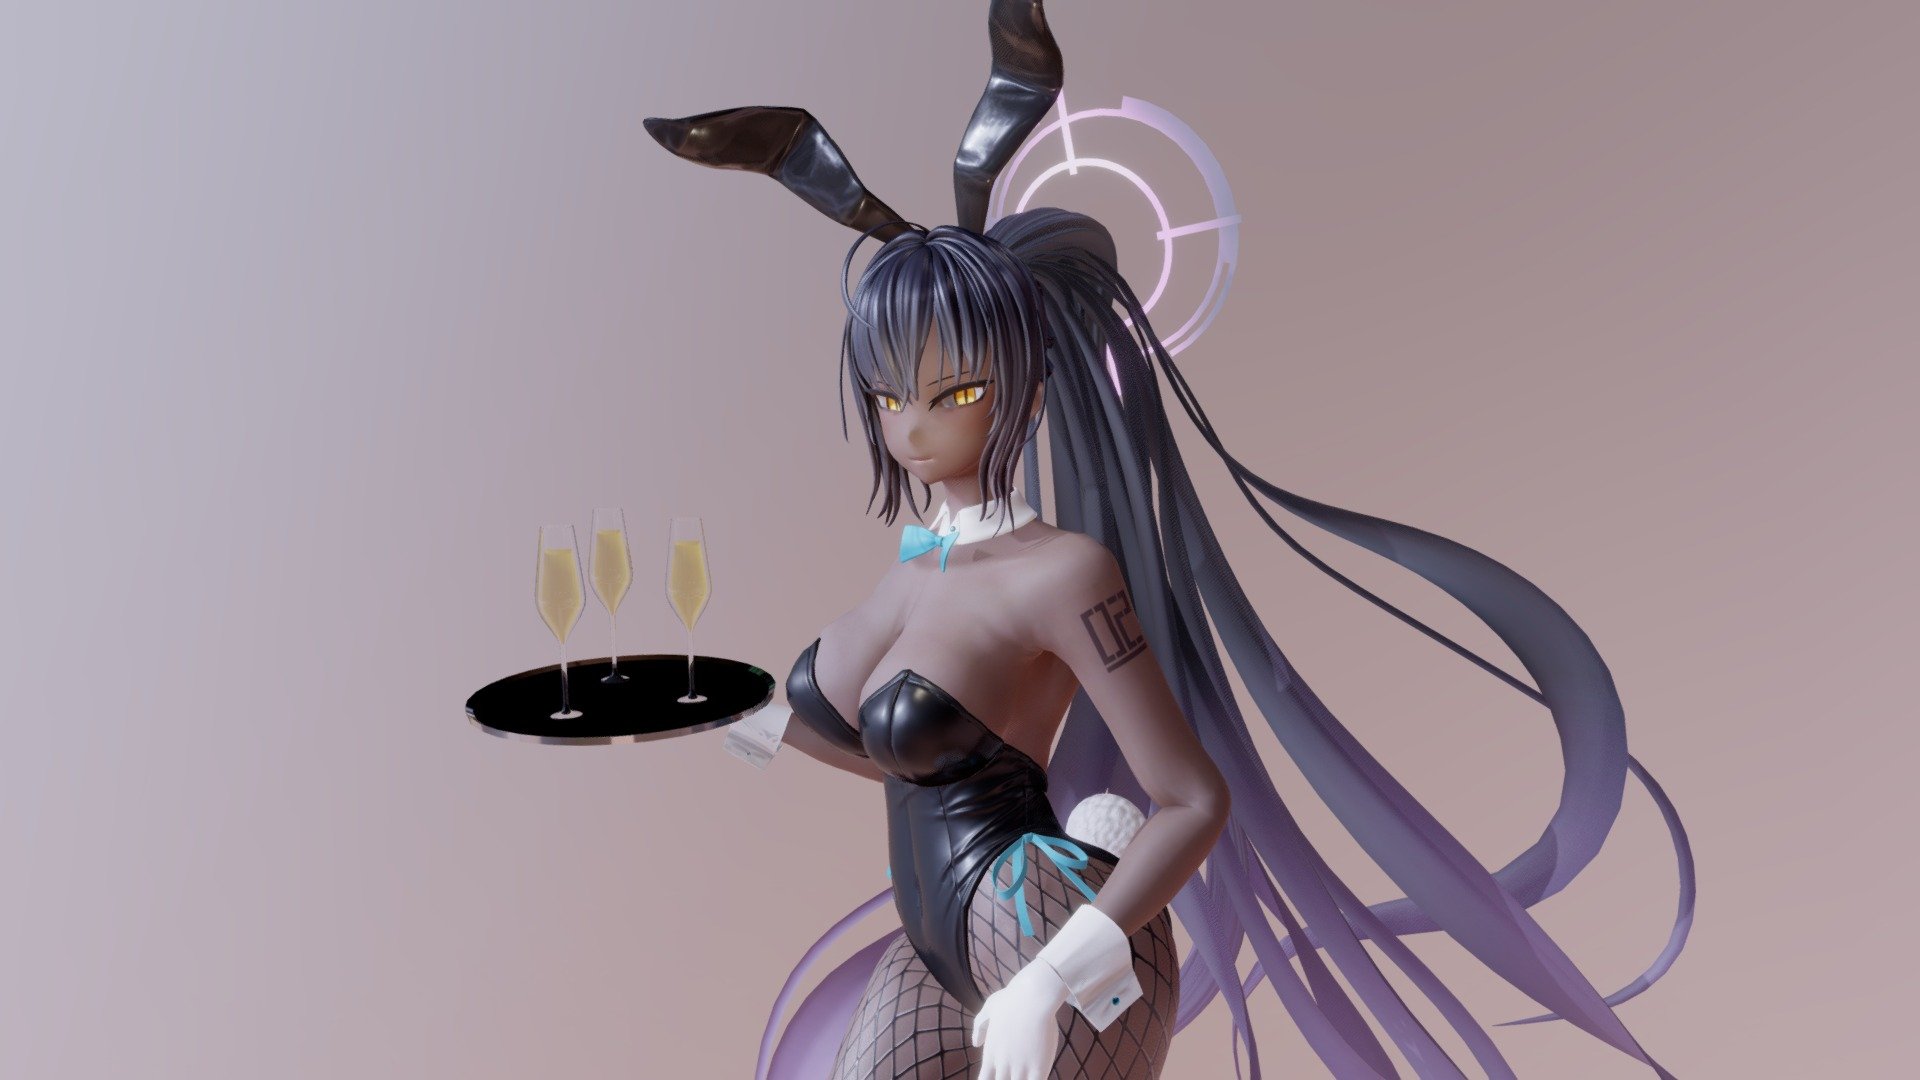 Bunny Chaser Aboard 

船上のバニーチェイサーより
バニーガール角楯 カリン - -Blue Archive- Karin (Bunny Girl) - 3D model by CBZN (@CBGN) 3d model